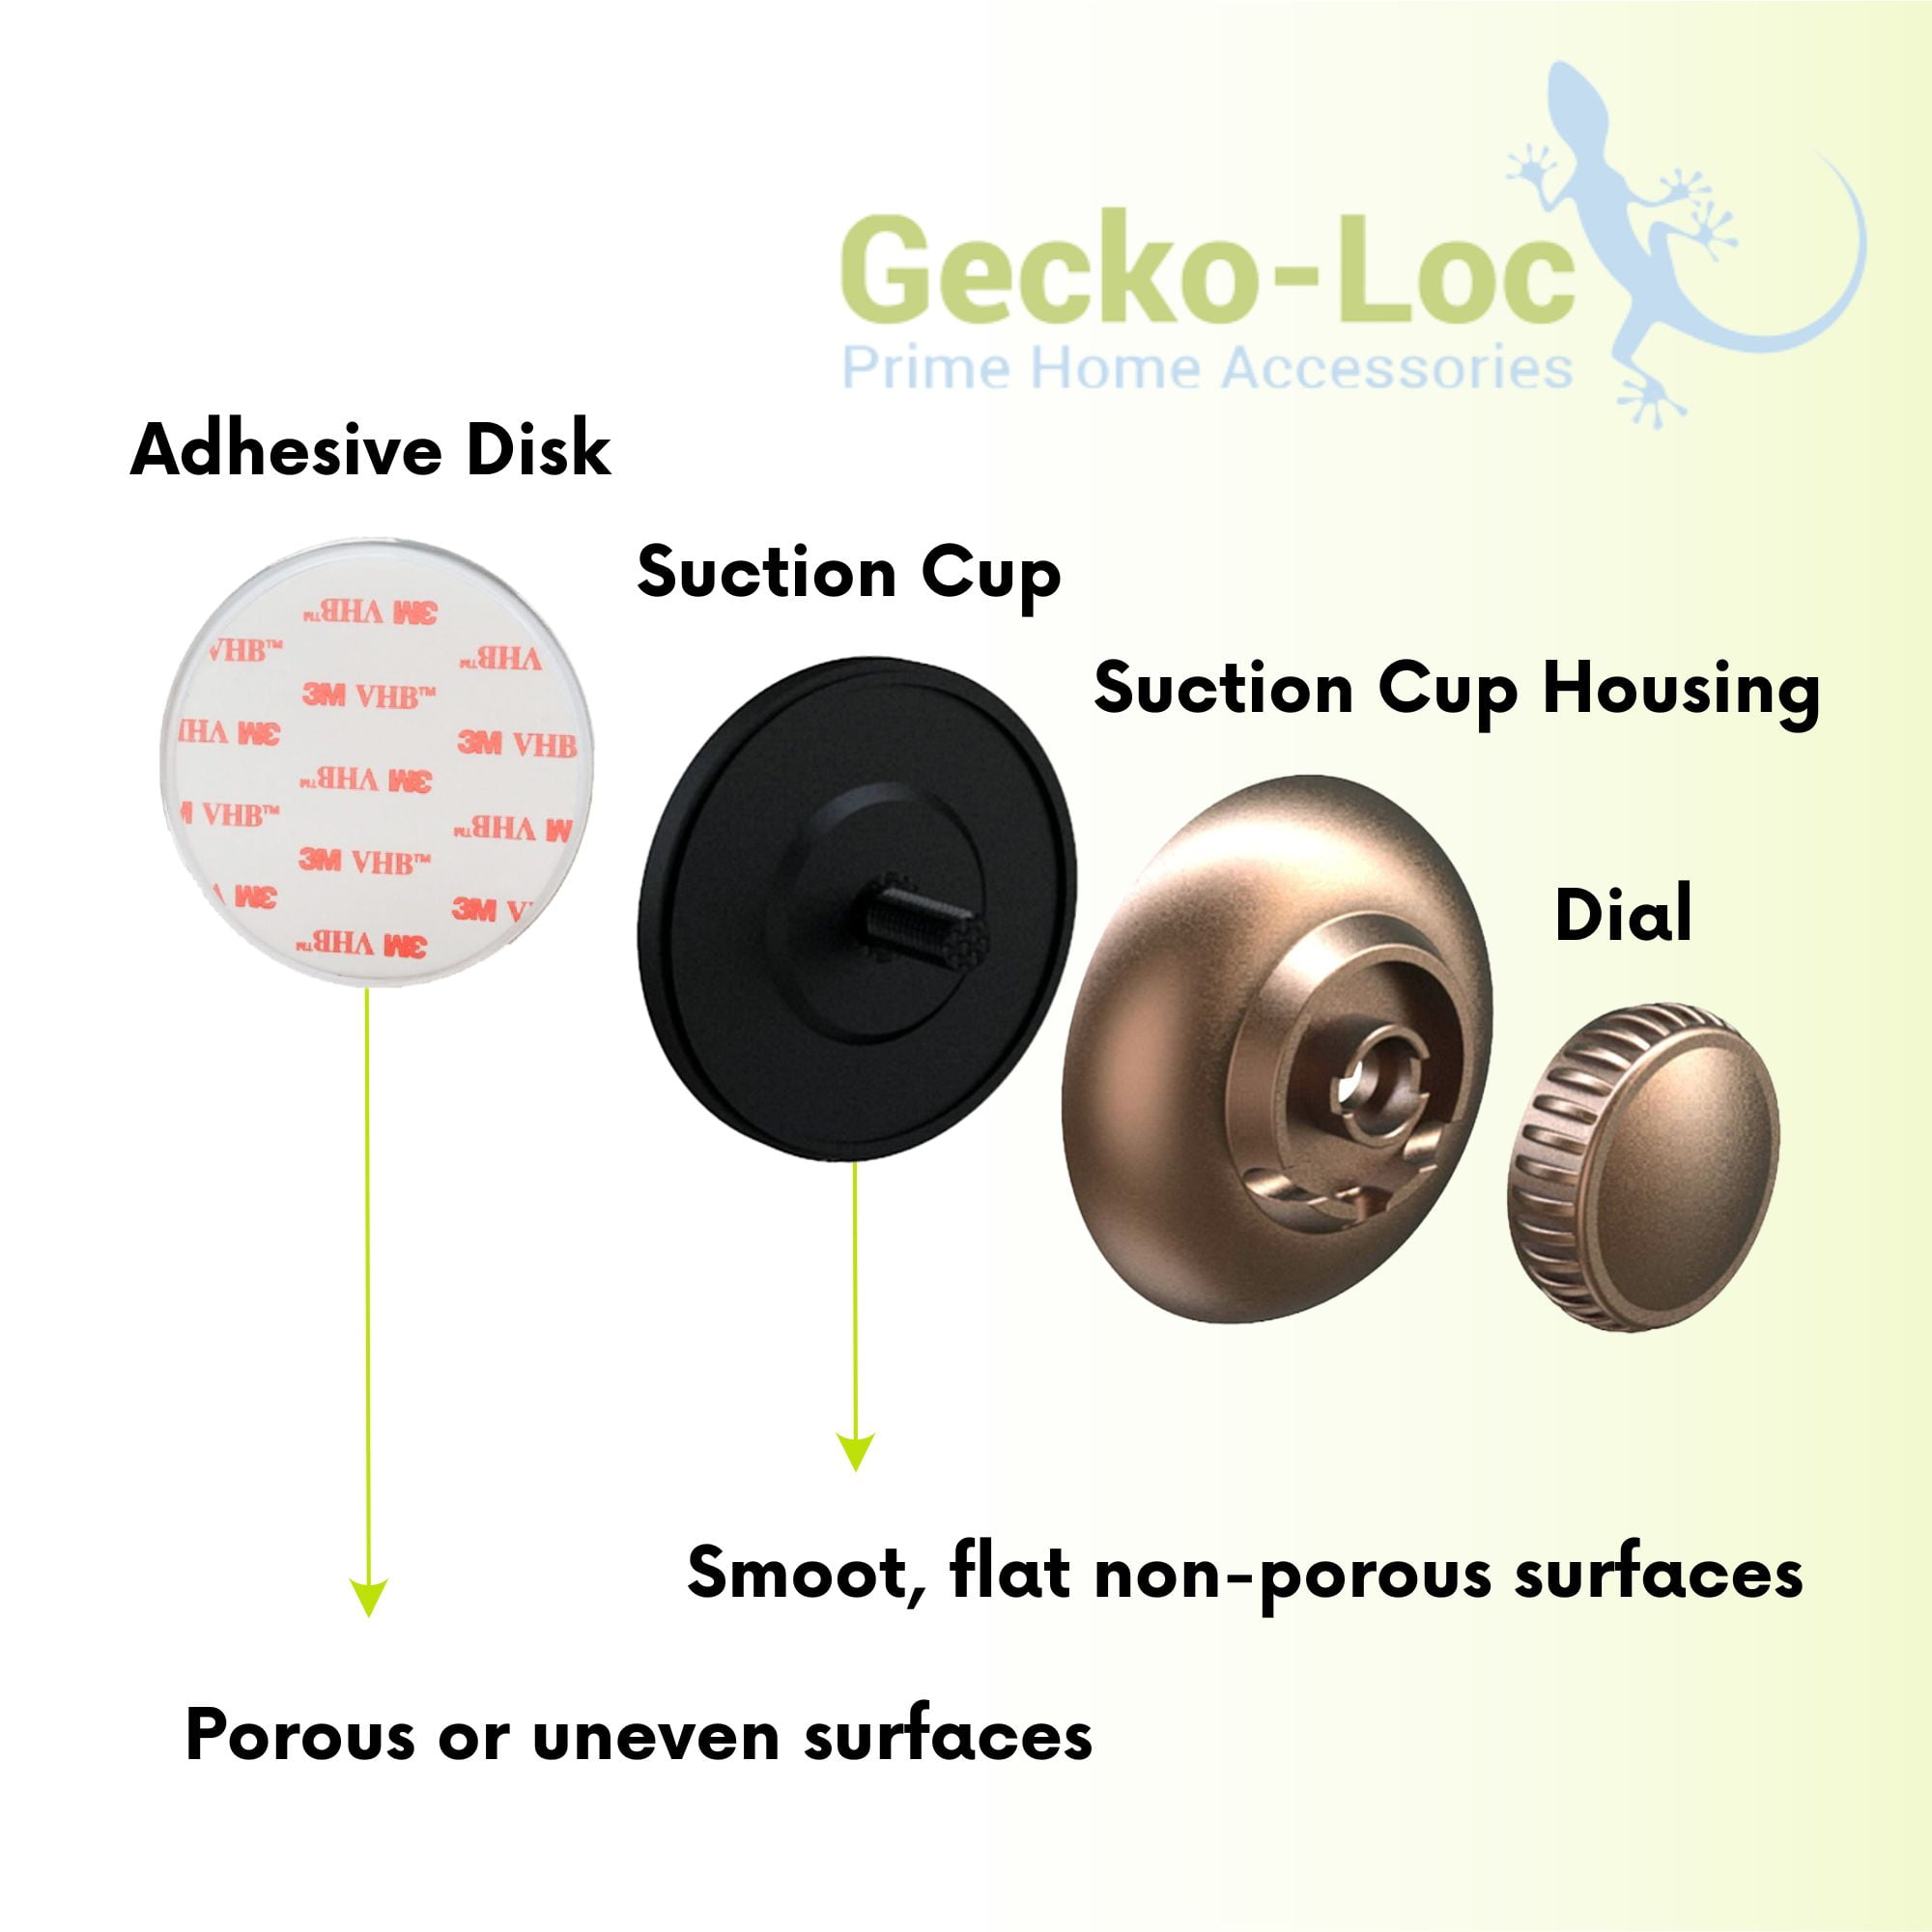 Gecko-Loc Long Over Showerhead Hanging Bathroom Shower Caddy - Bronze 